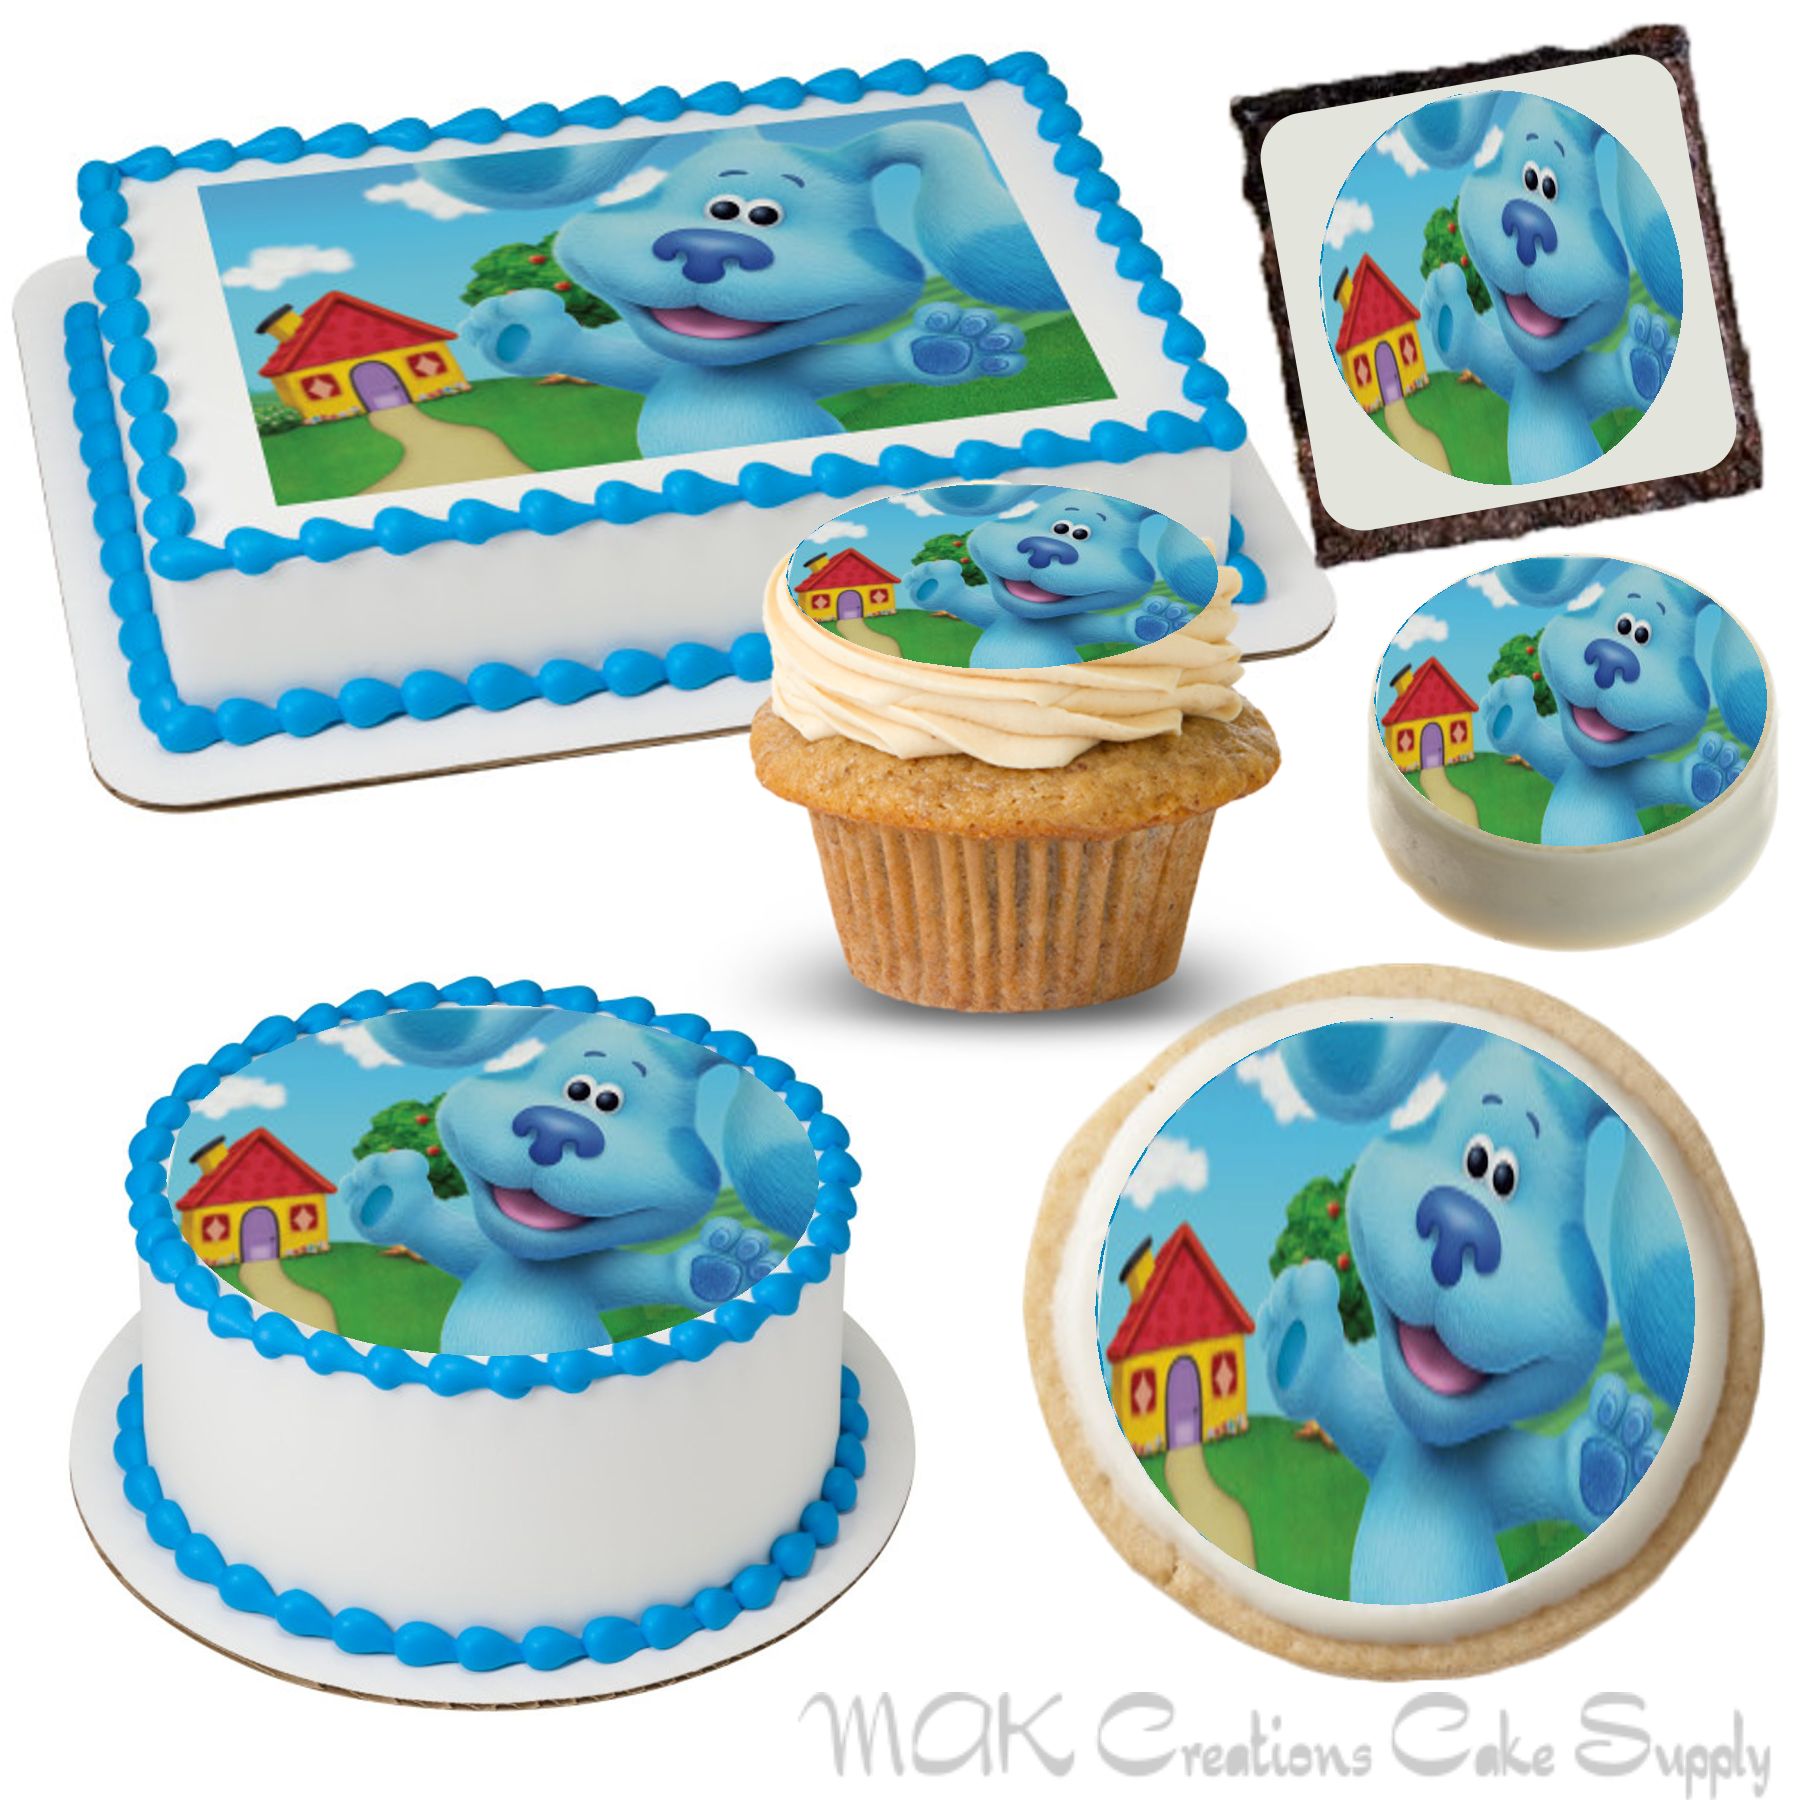 Blue's Clues Cake & Cupcakes